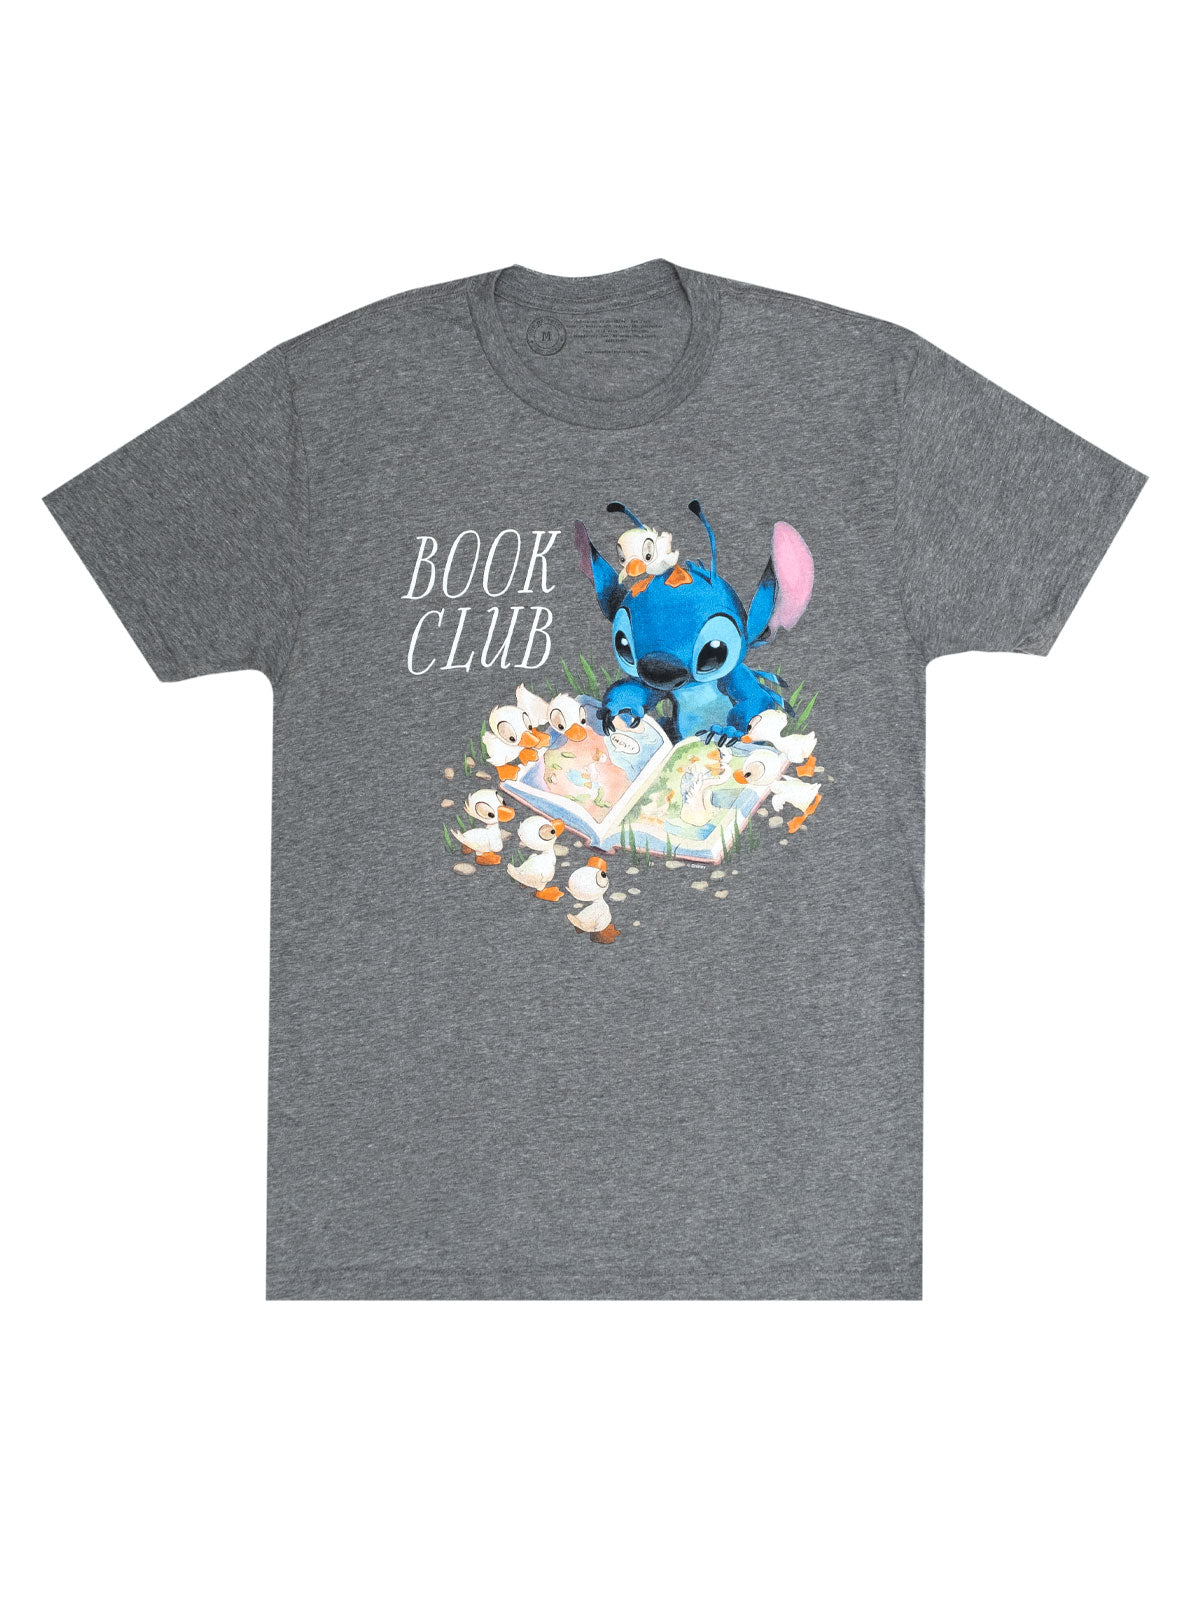 Disney Lilo & Stitch Blue Character Print Shorts 5 Pack